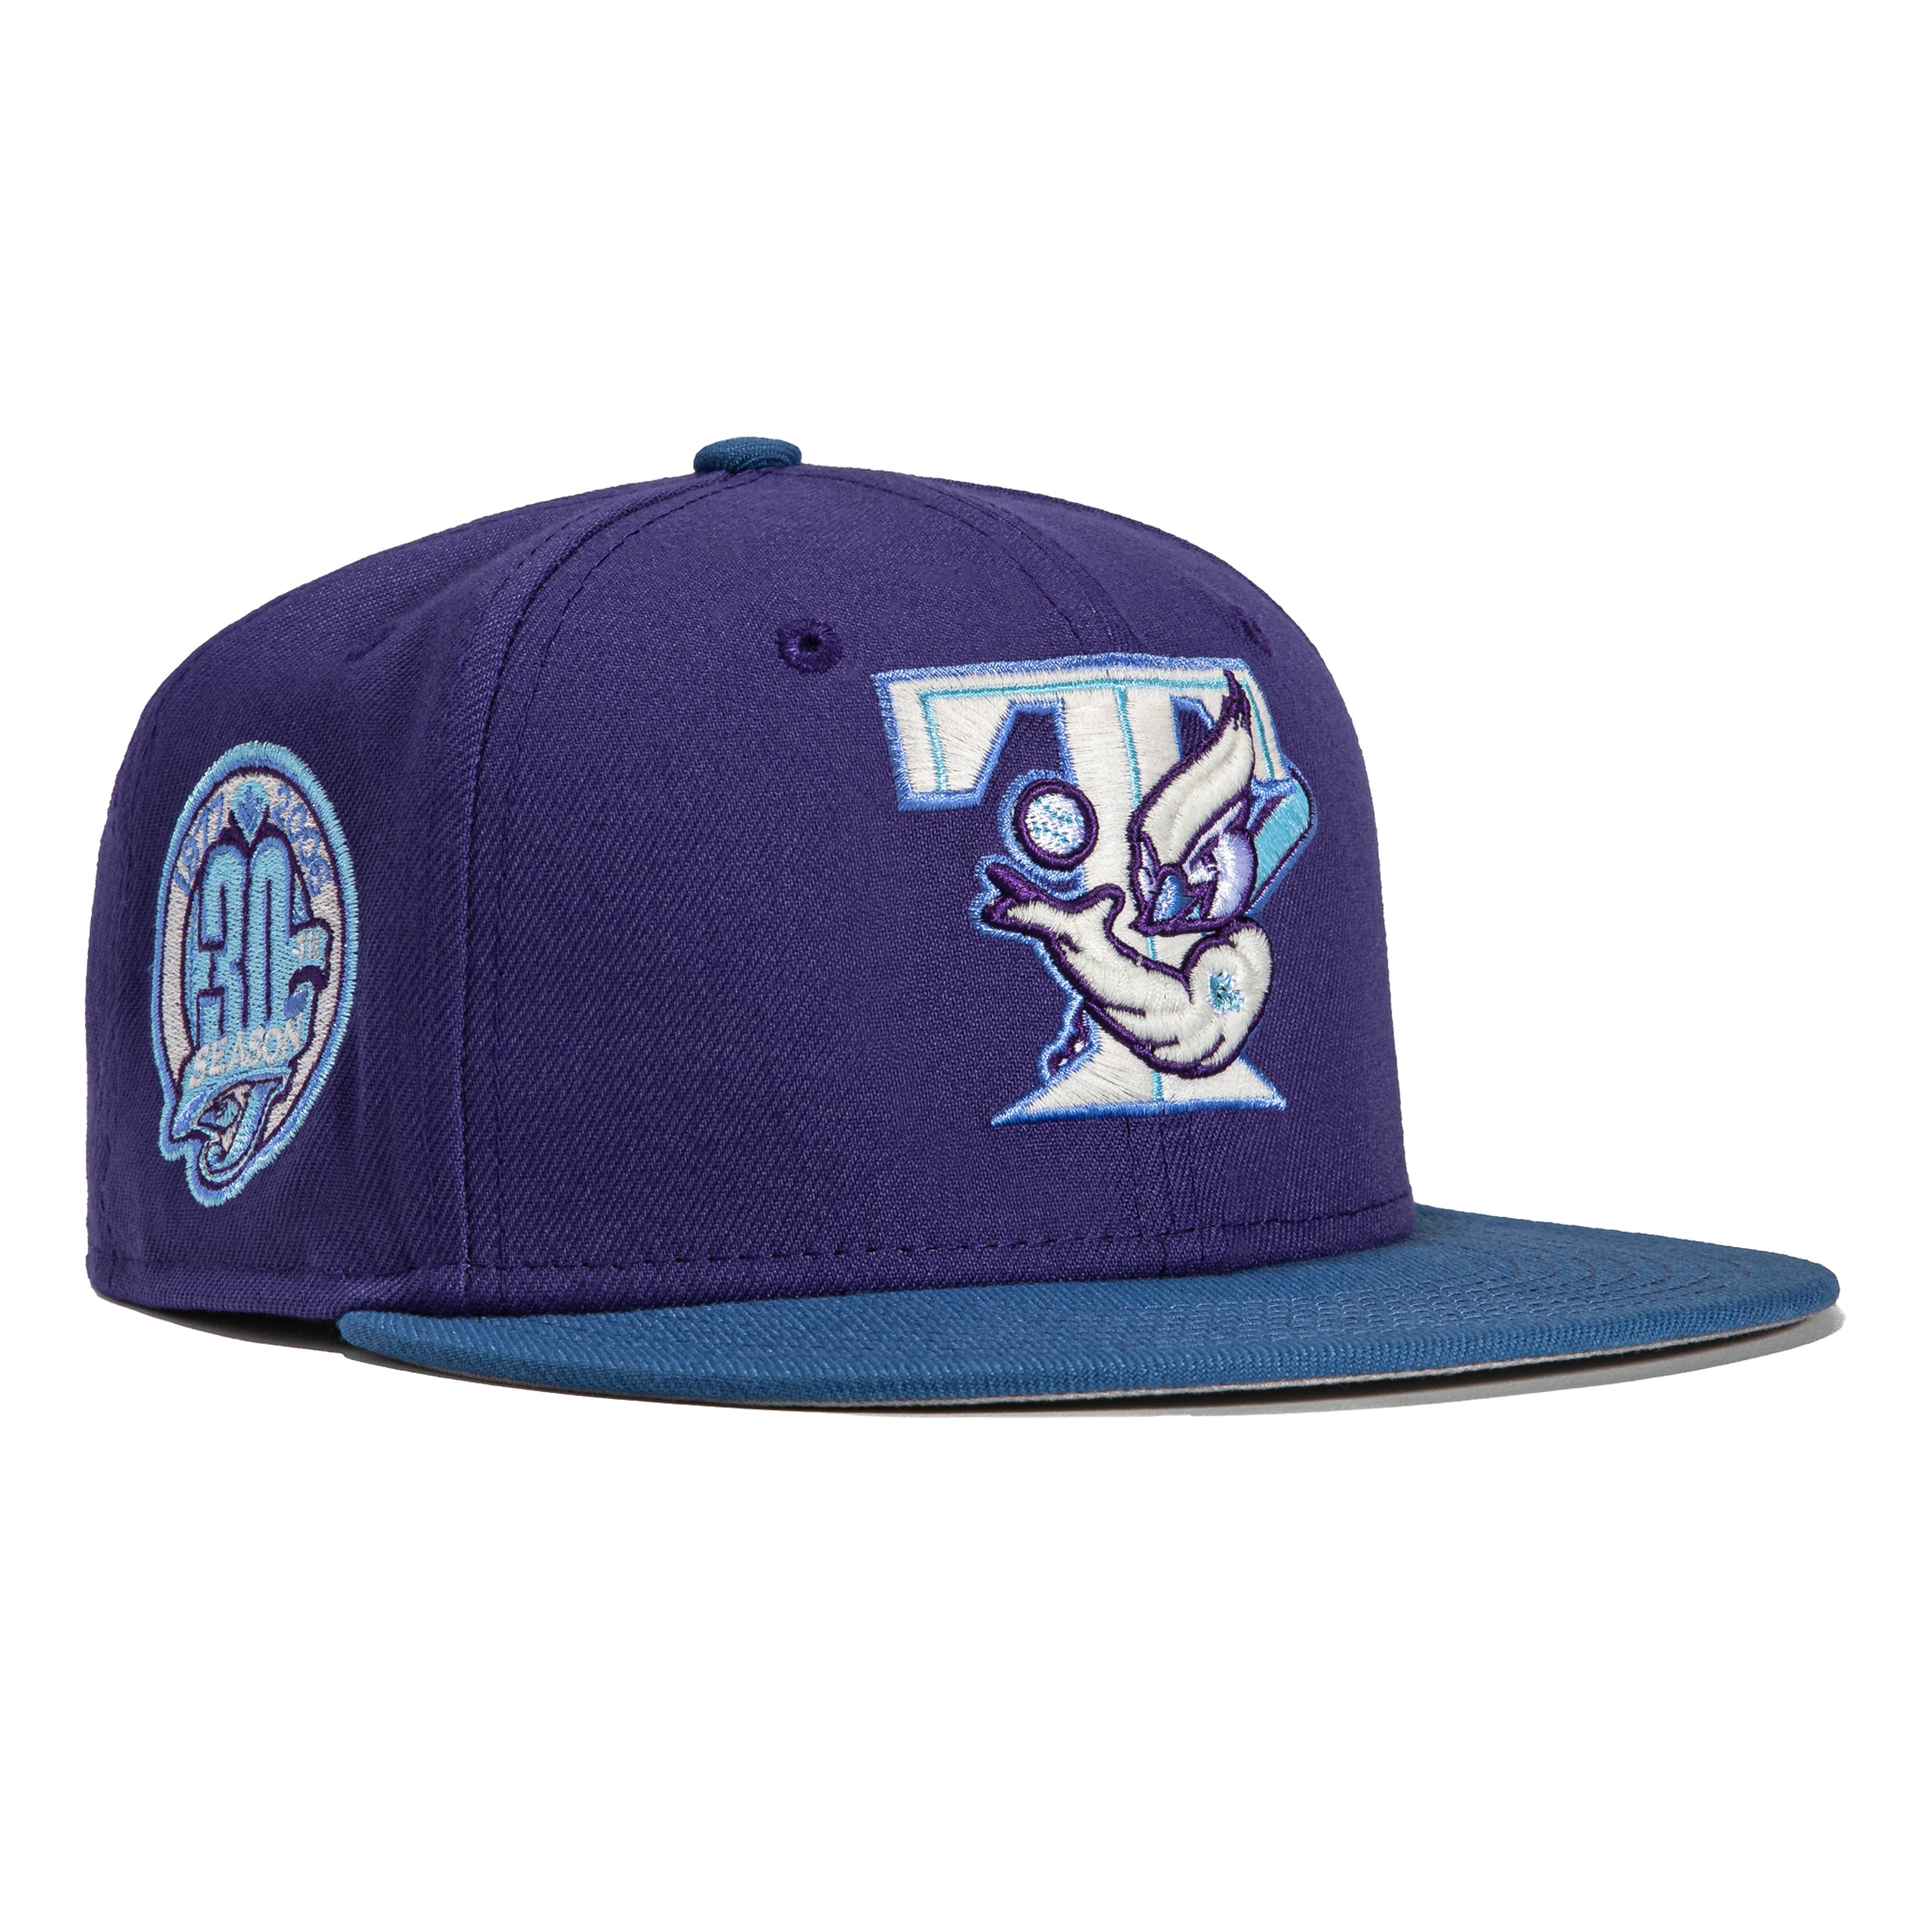 New Era White Toronto Blue Jays Neon Eye 59FIFTY Fitted Hat